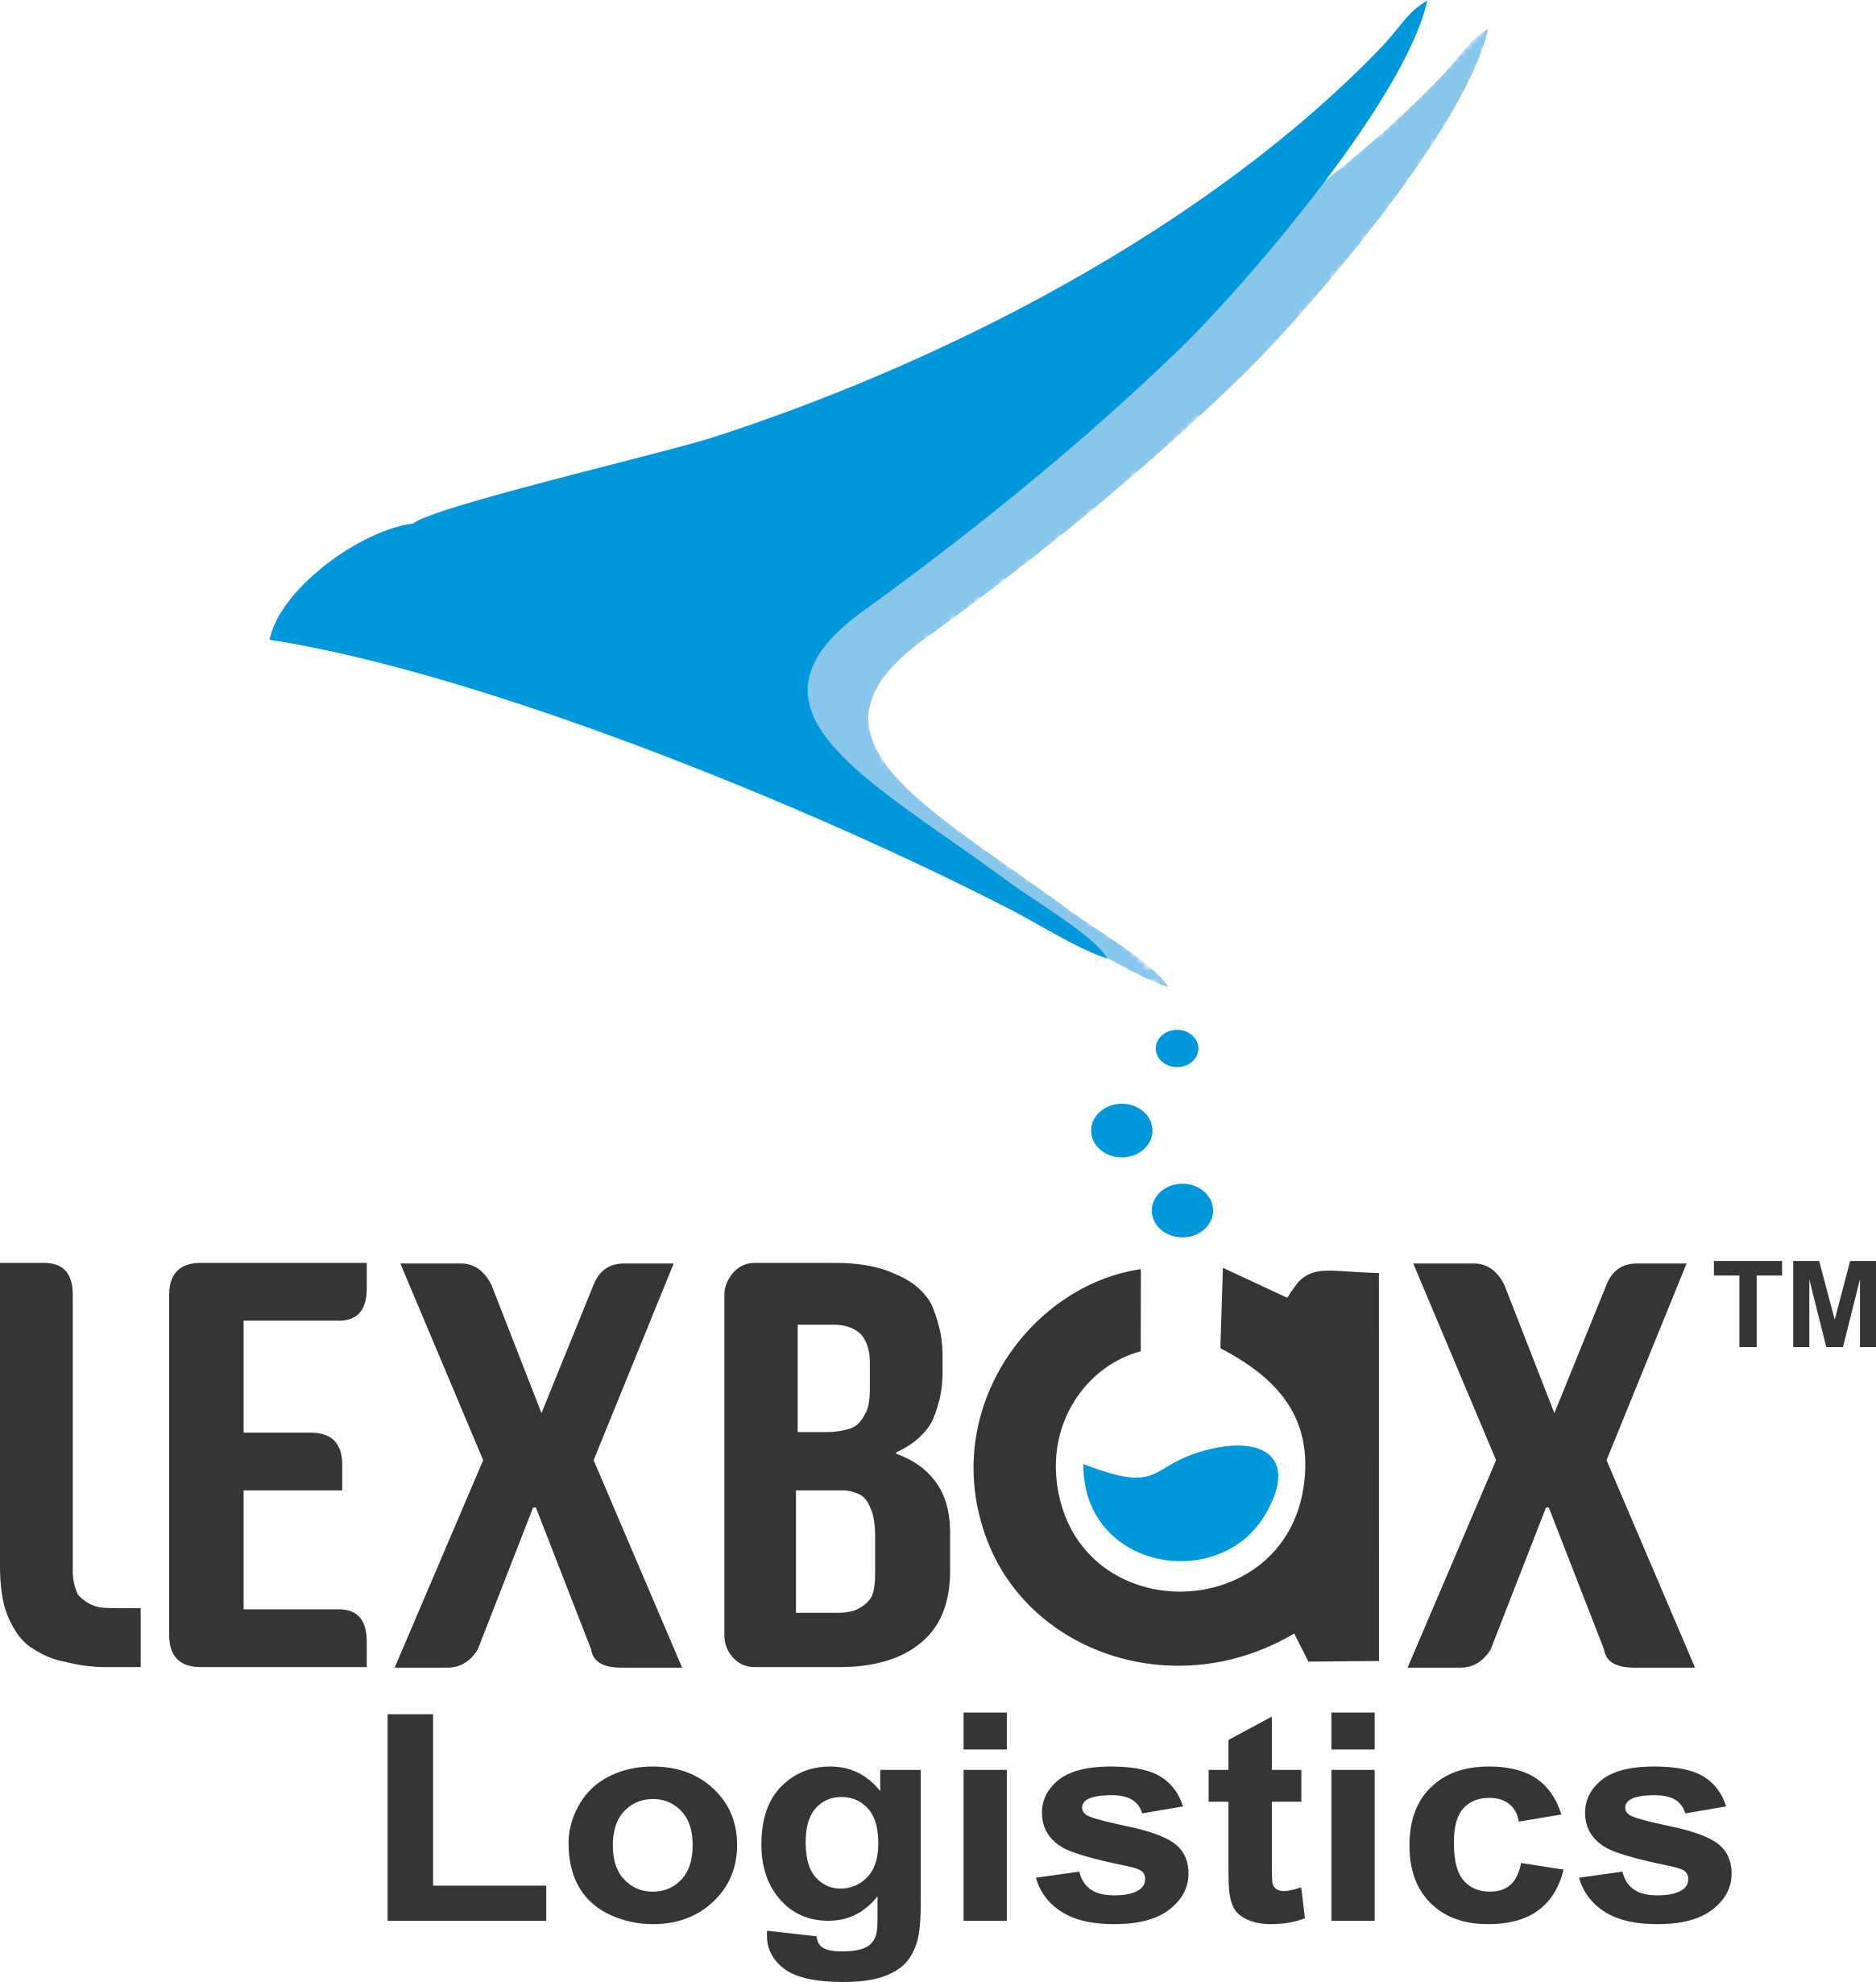 Lexbax Logistics